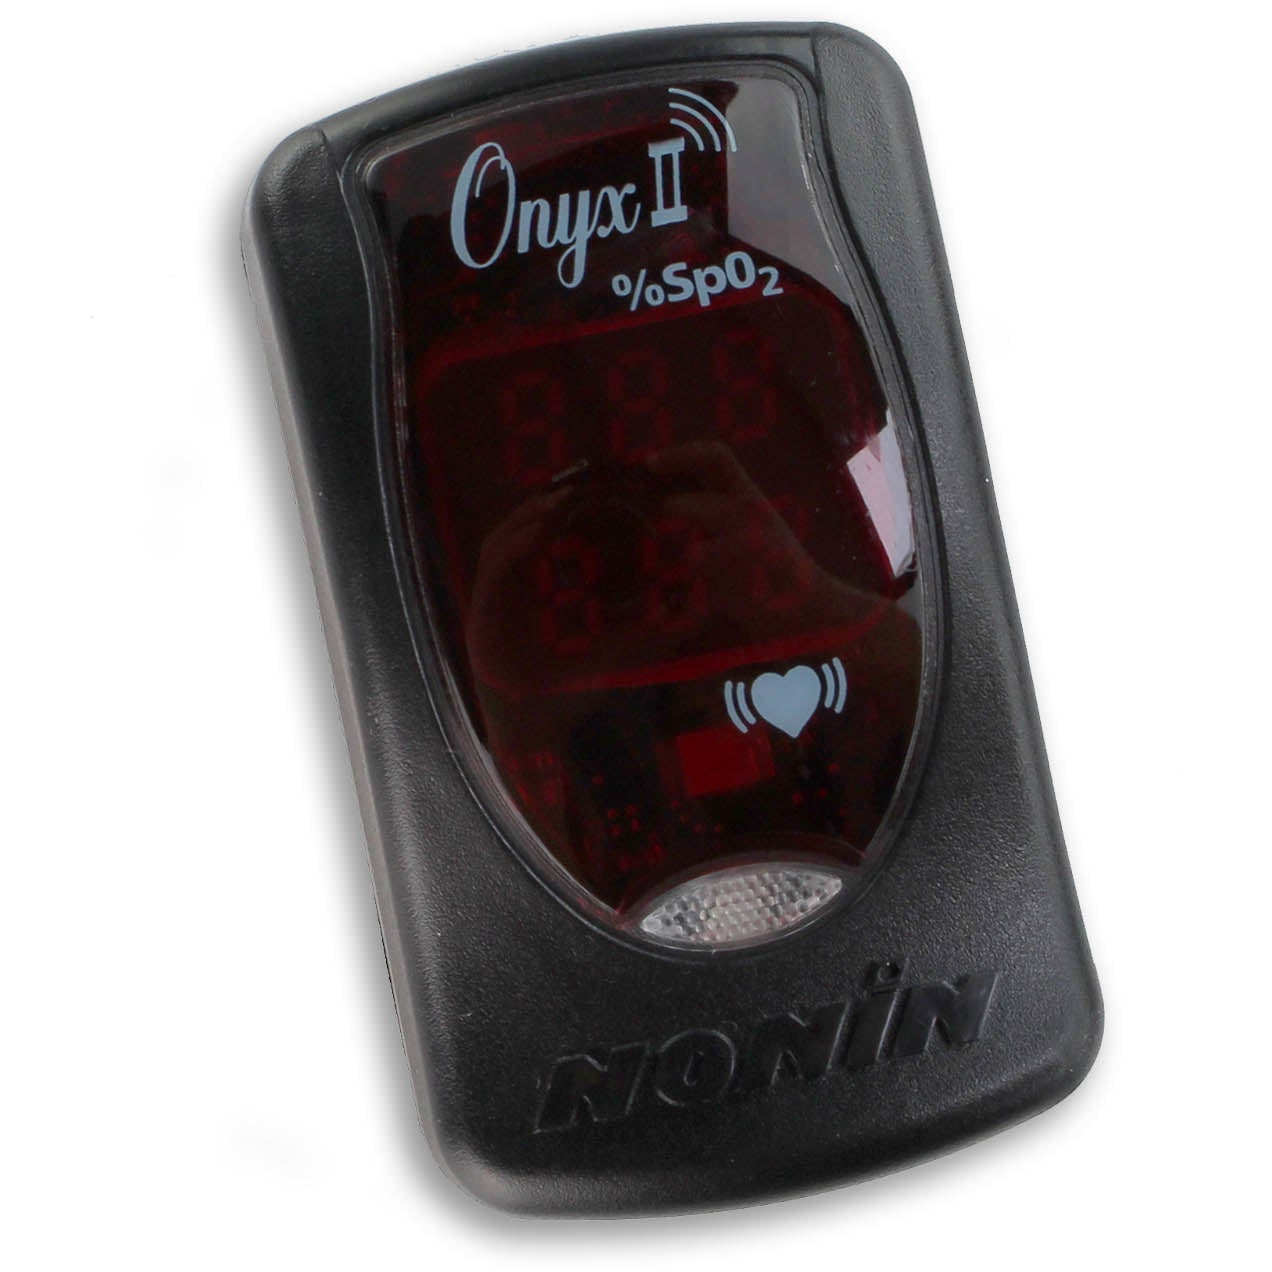 Nonin 9550 Onyx II Finger Pulse Oximeter